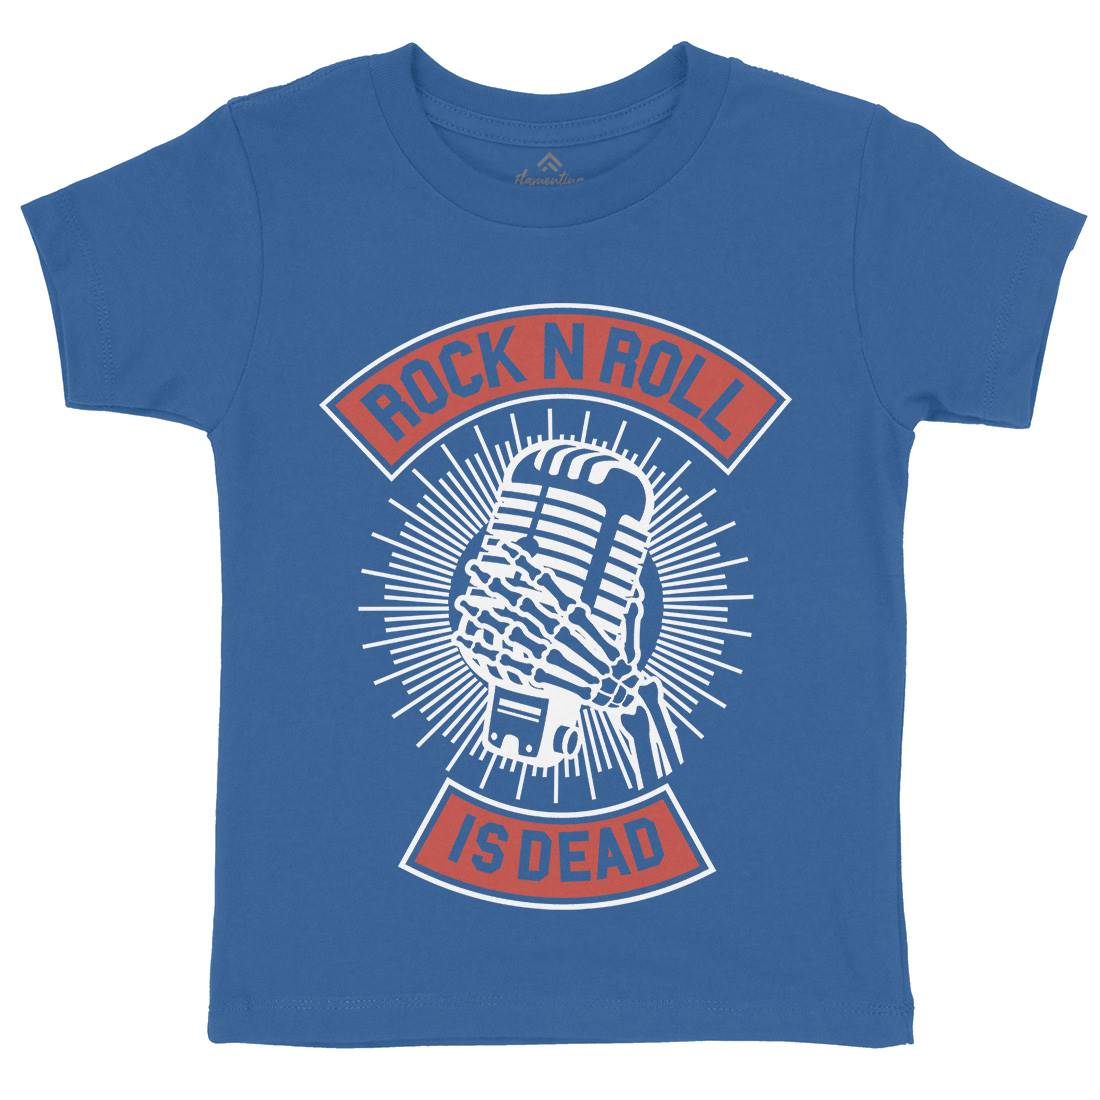 Rock N Roll Is Dead Kids Crew Neck T-Shirt Music A272